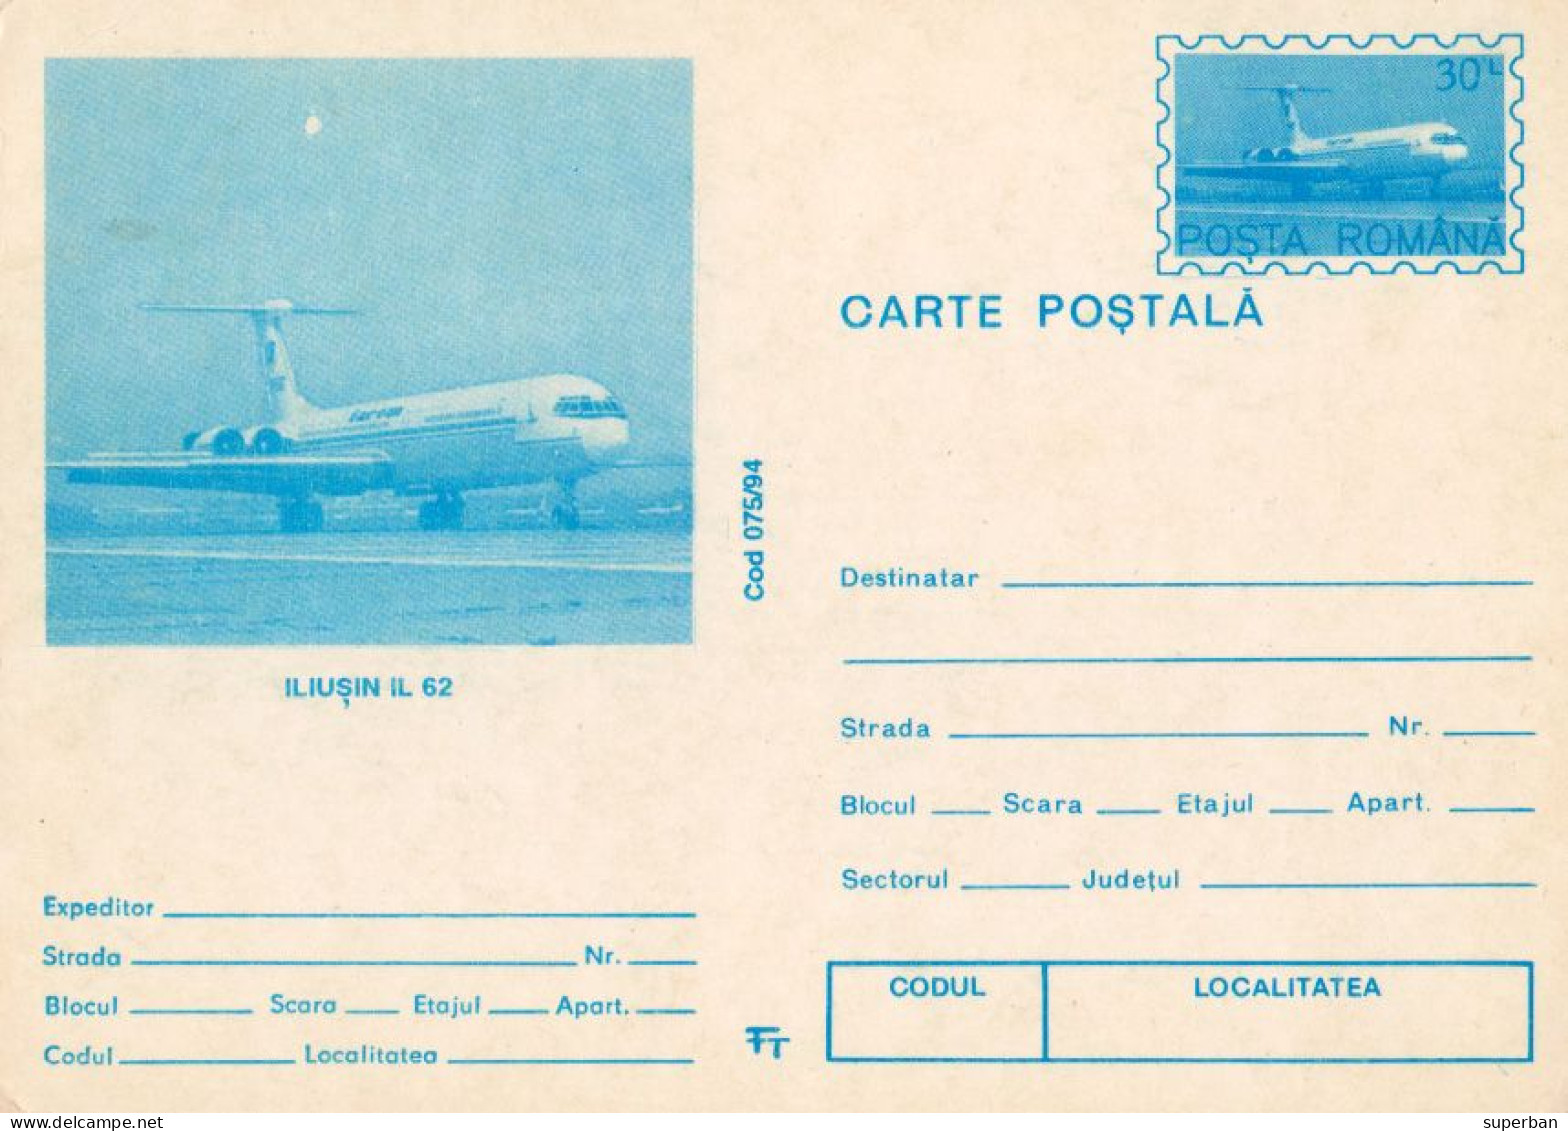 ROMANIA : AVION / AIRPLANE ILIUSHIN IL 62 - ENTIER POSTAL ILLUSTRÉ / STATIONERY PICTURE POSTCARD - 1994 : 30 LEI (an678) - Postal Stationery